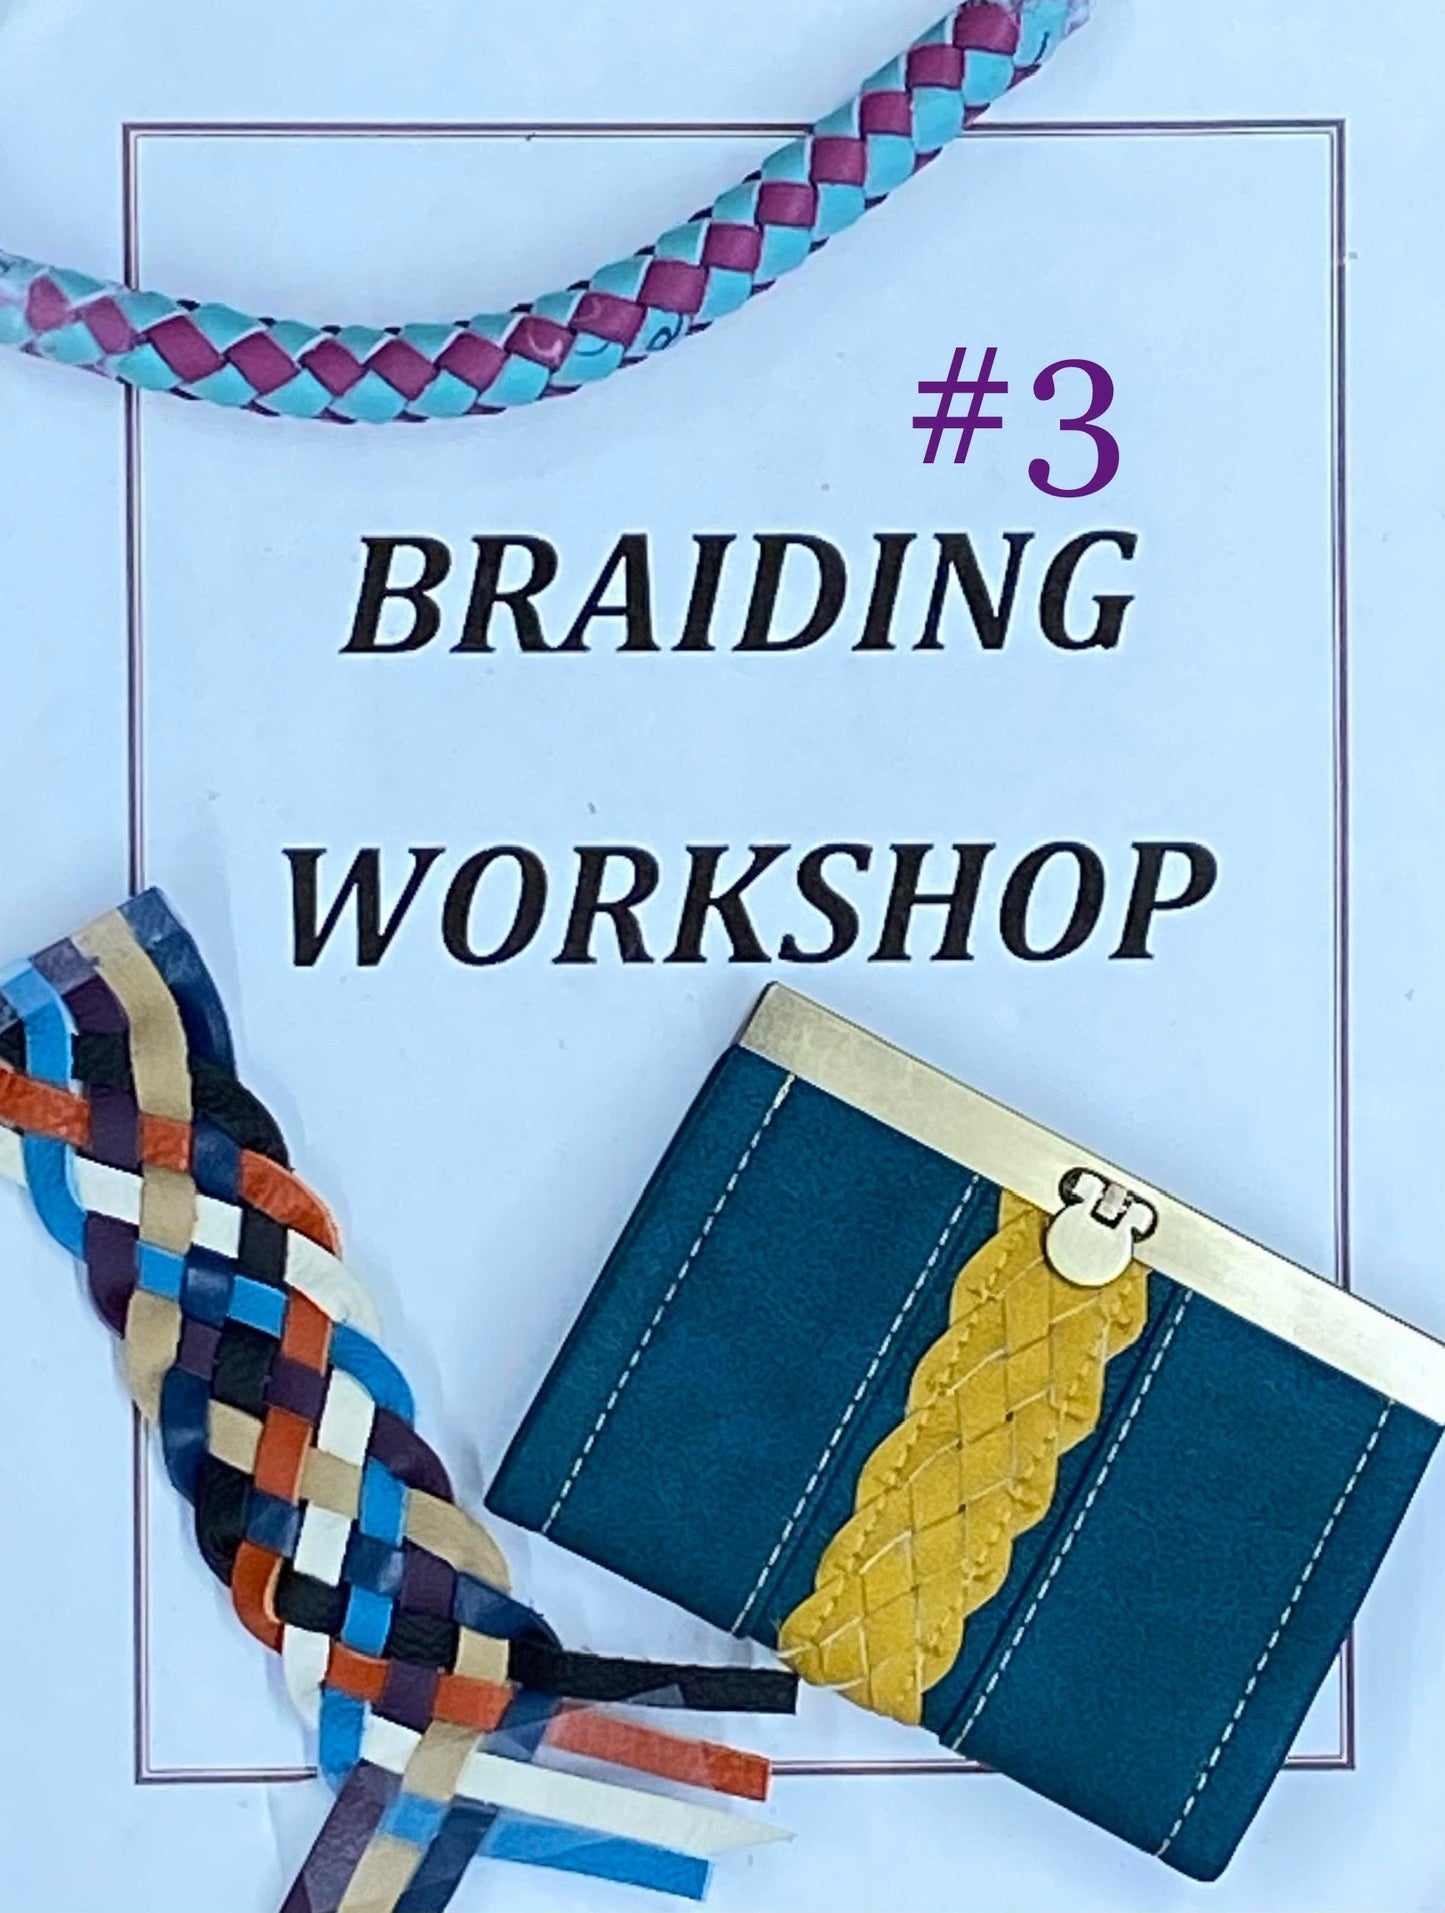 Braiding Workshop #3- Video 1, Session 1